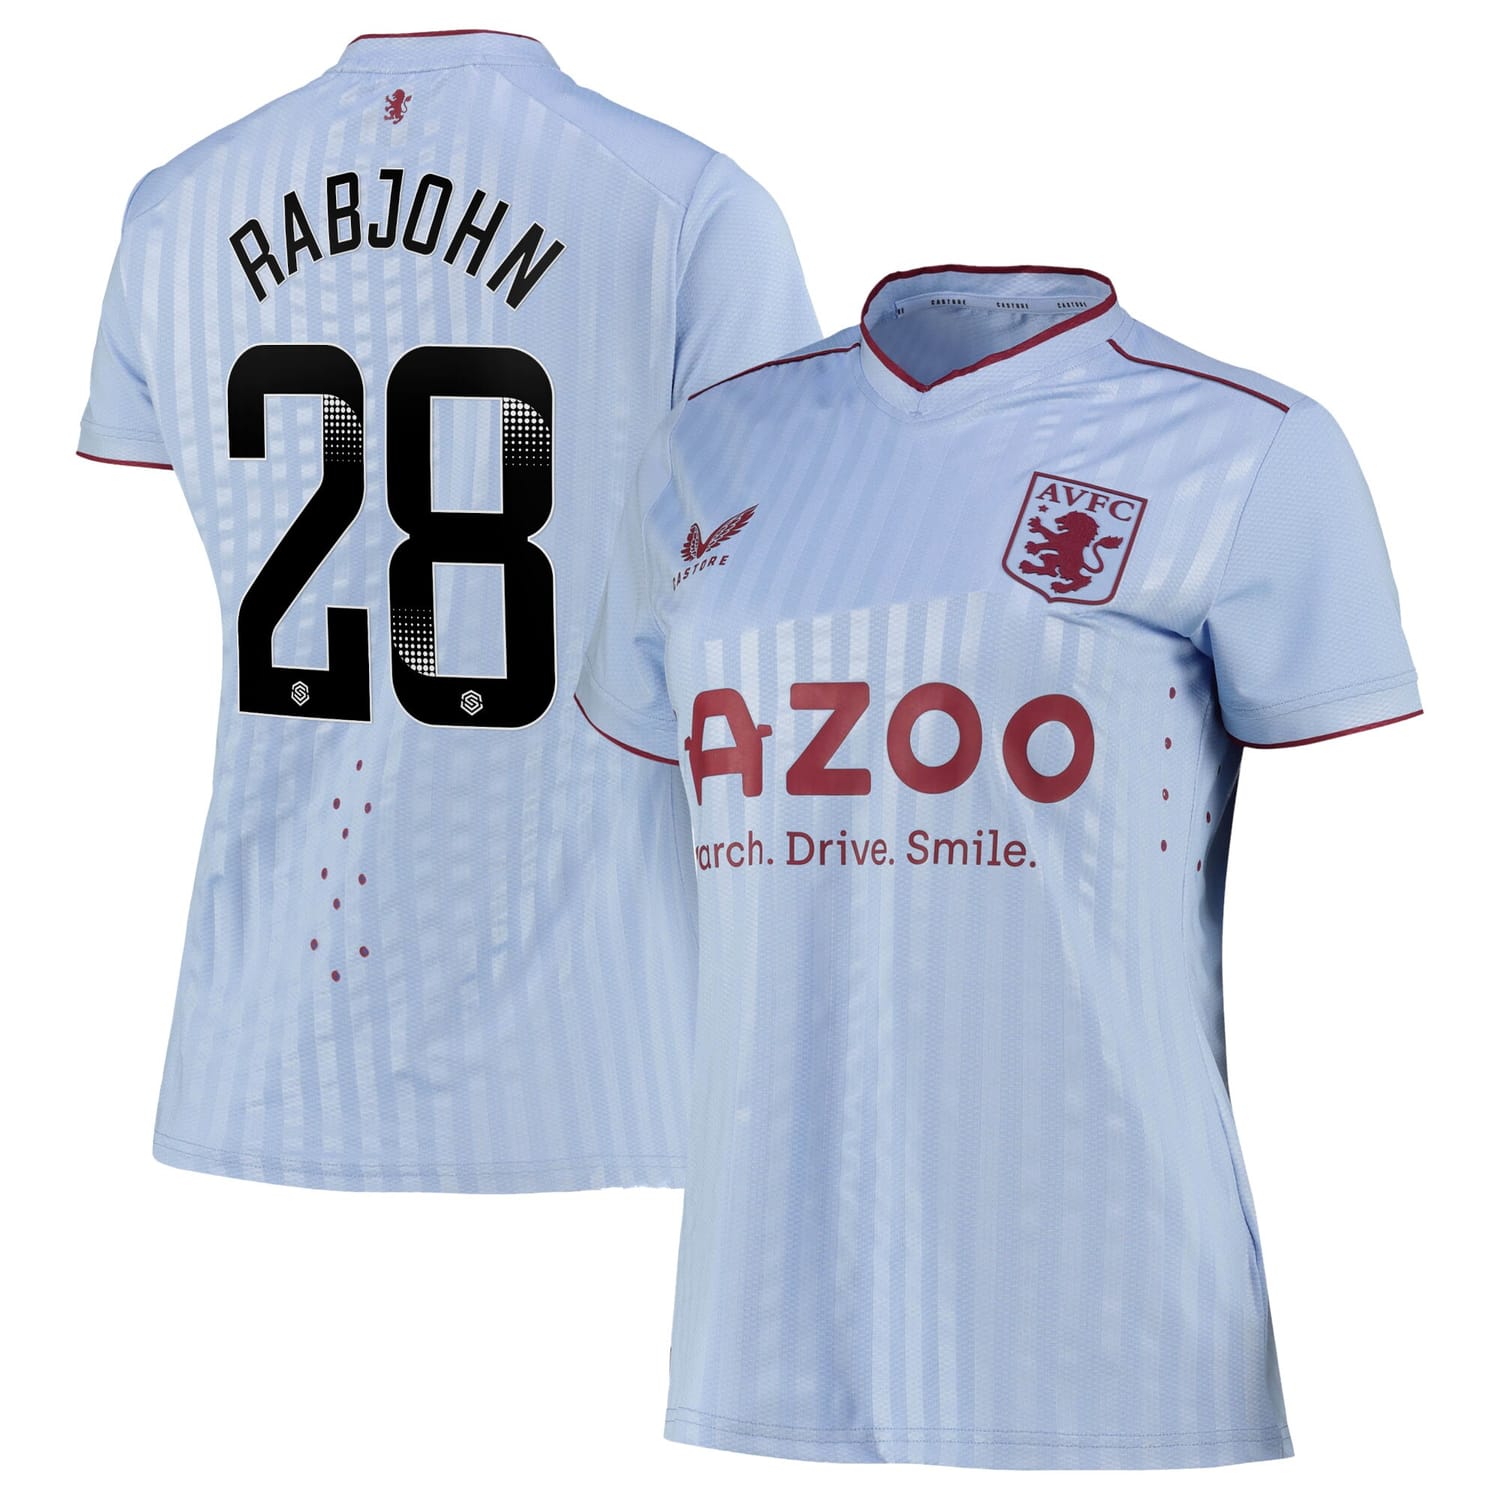 Premier League Aston Villa Away Pro Jersey Shirt 2022-23 player Evie Rabjohn 28 printing for Women